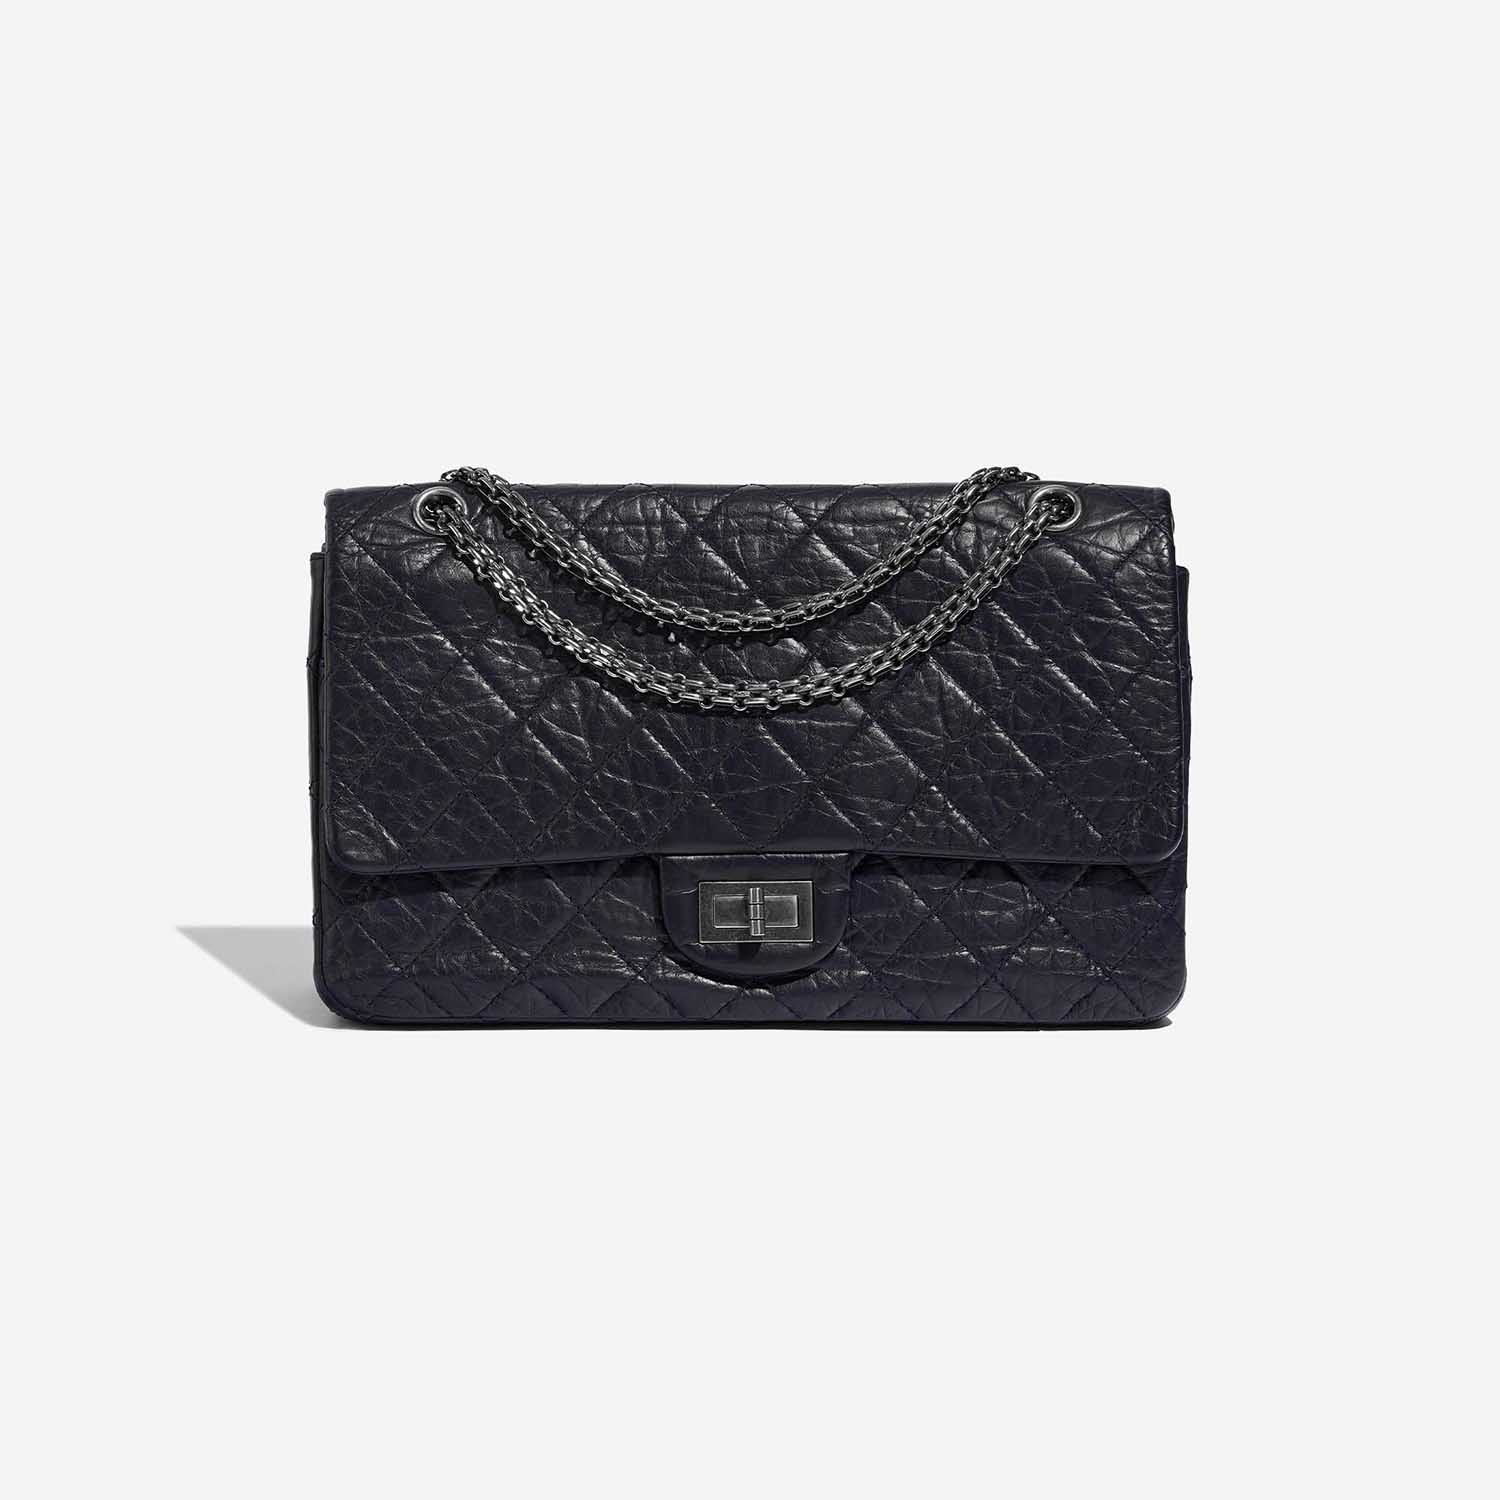 Pre-owned Chanel bag 2.55 Reissue 227 Aged Calfskin Dark Blue Blue Front | Sell your designer bag on Saclab.com